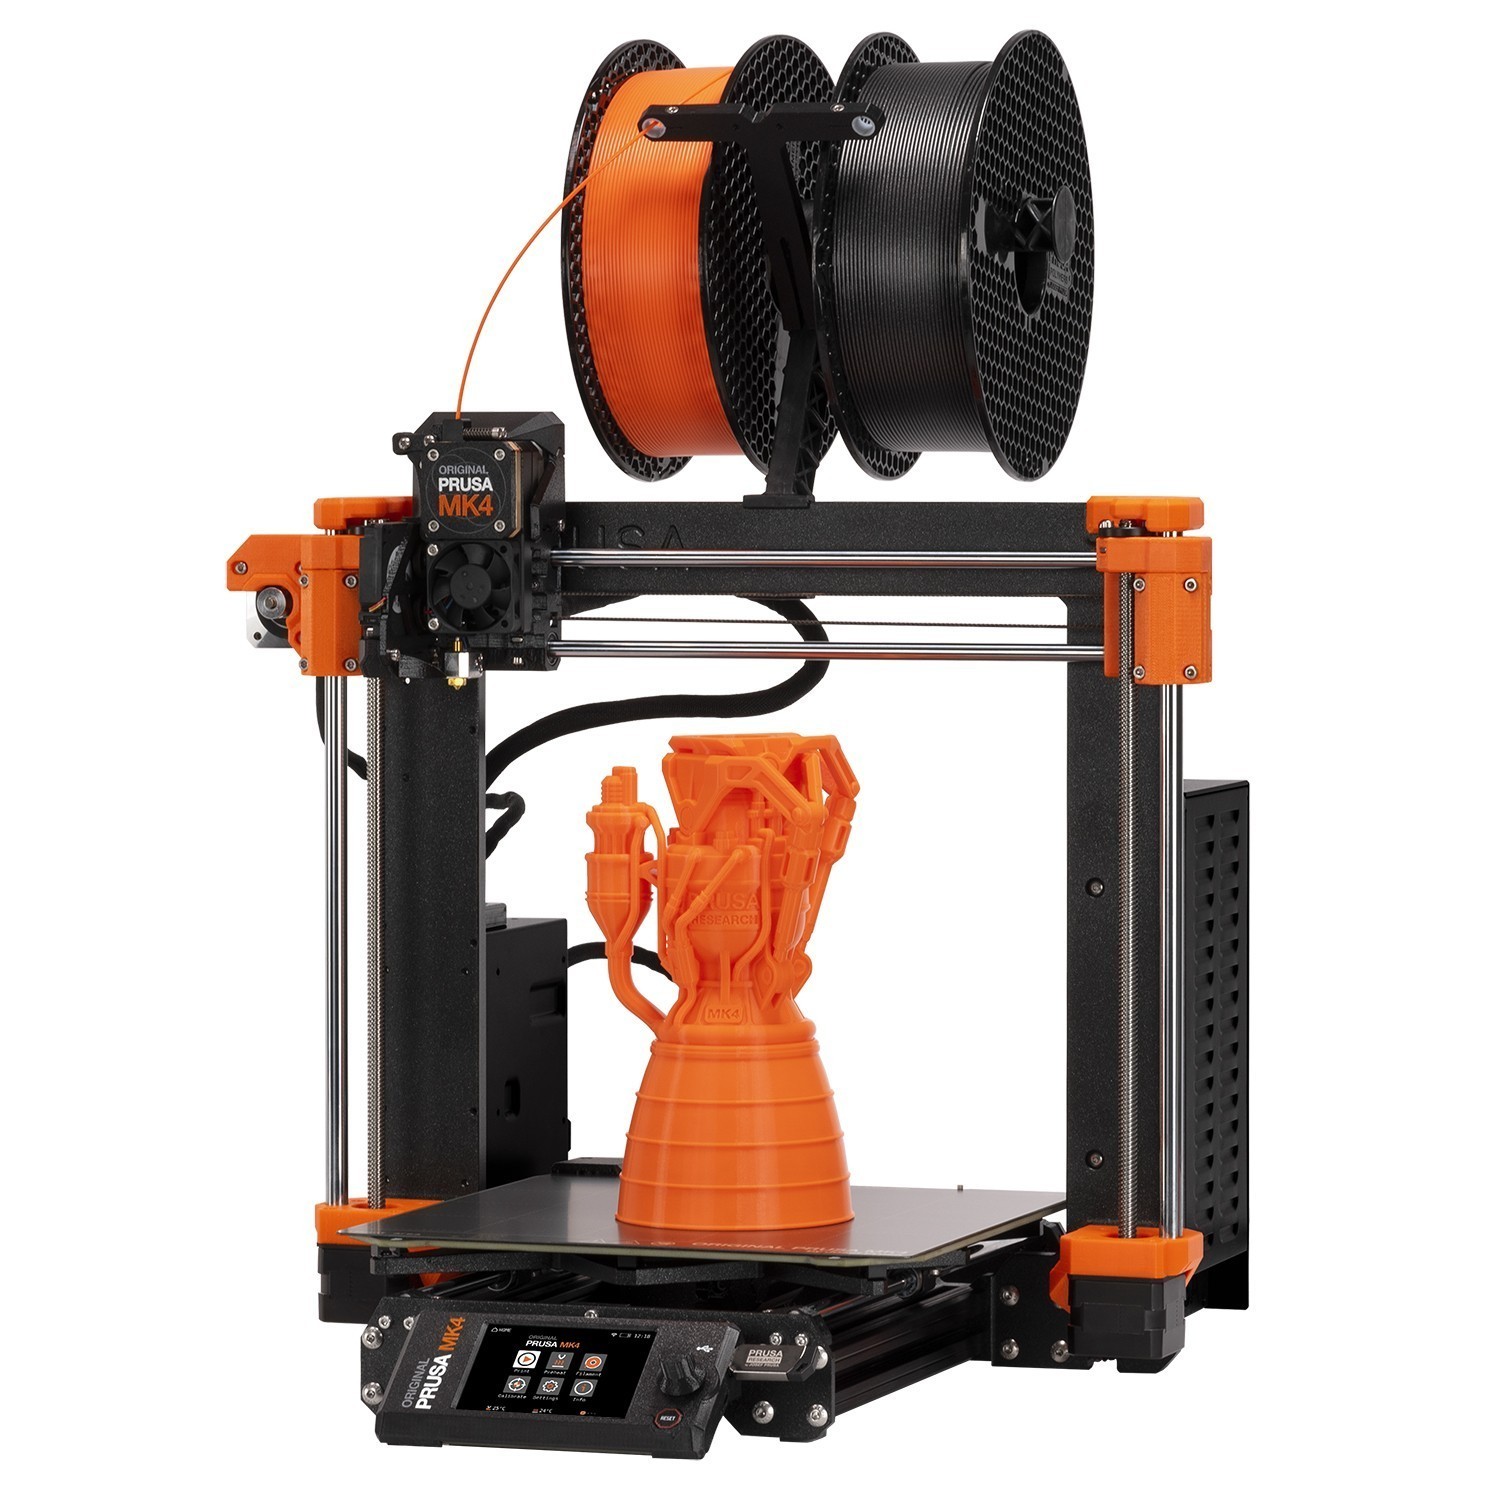 Prusa MK4 3D Printer